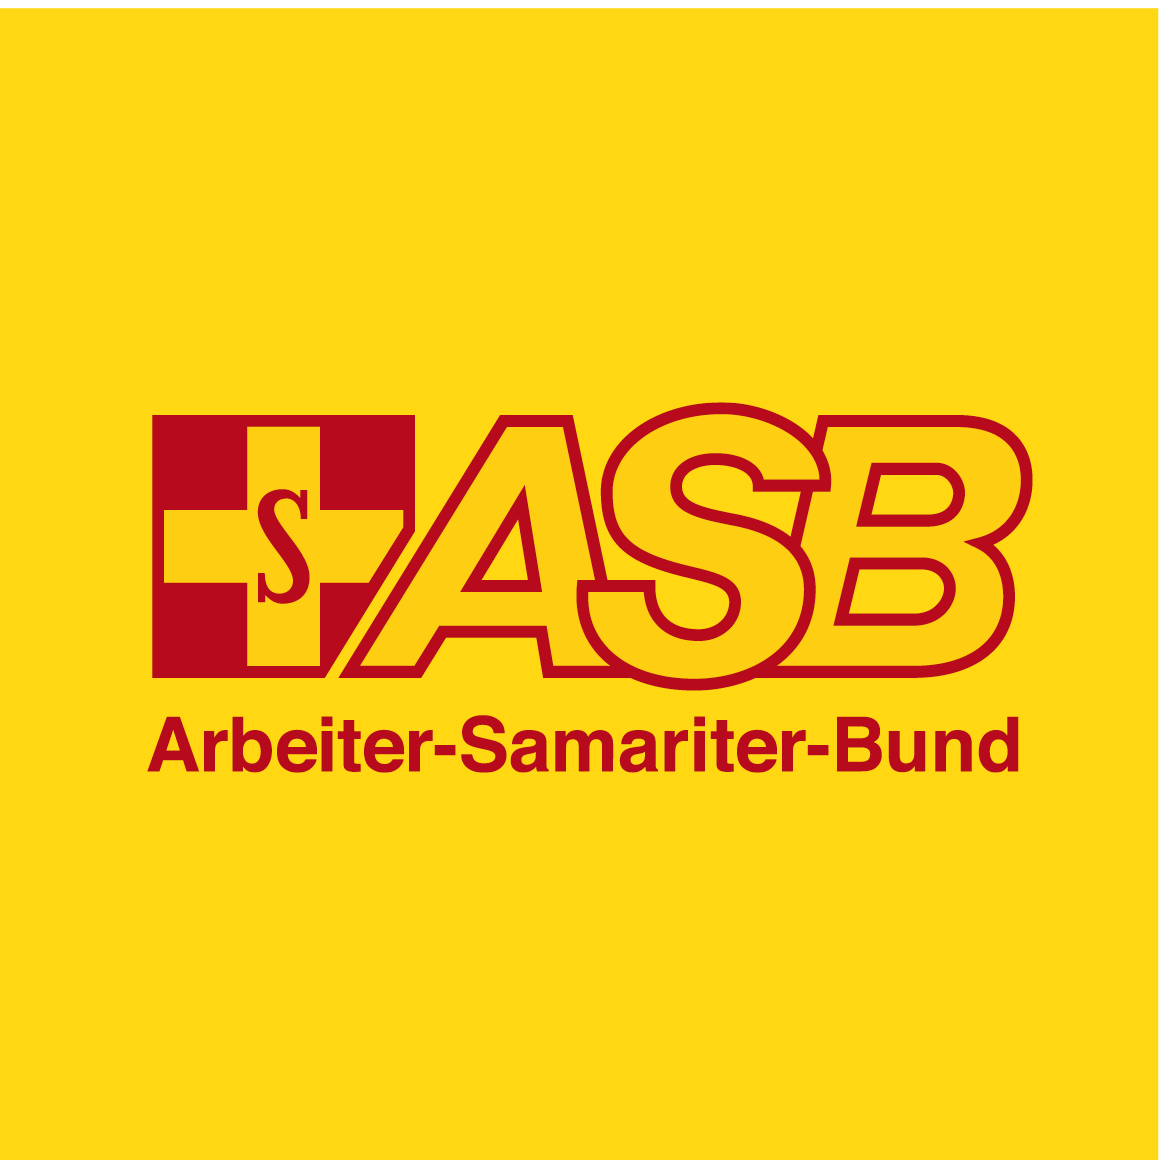 ASB_Bremen_Arbeiter-Samariter-Bund_Landesverband_Bremen_e.V._Logo_2018-02-11.png